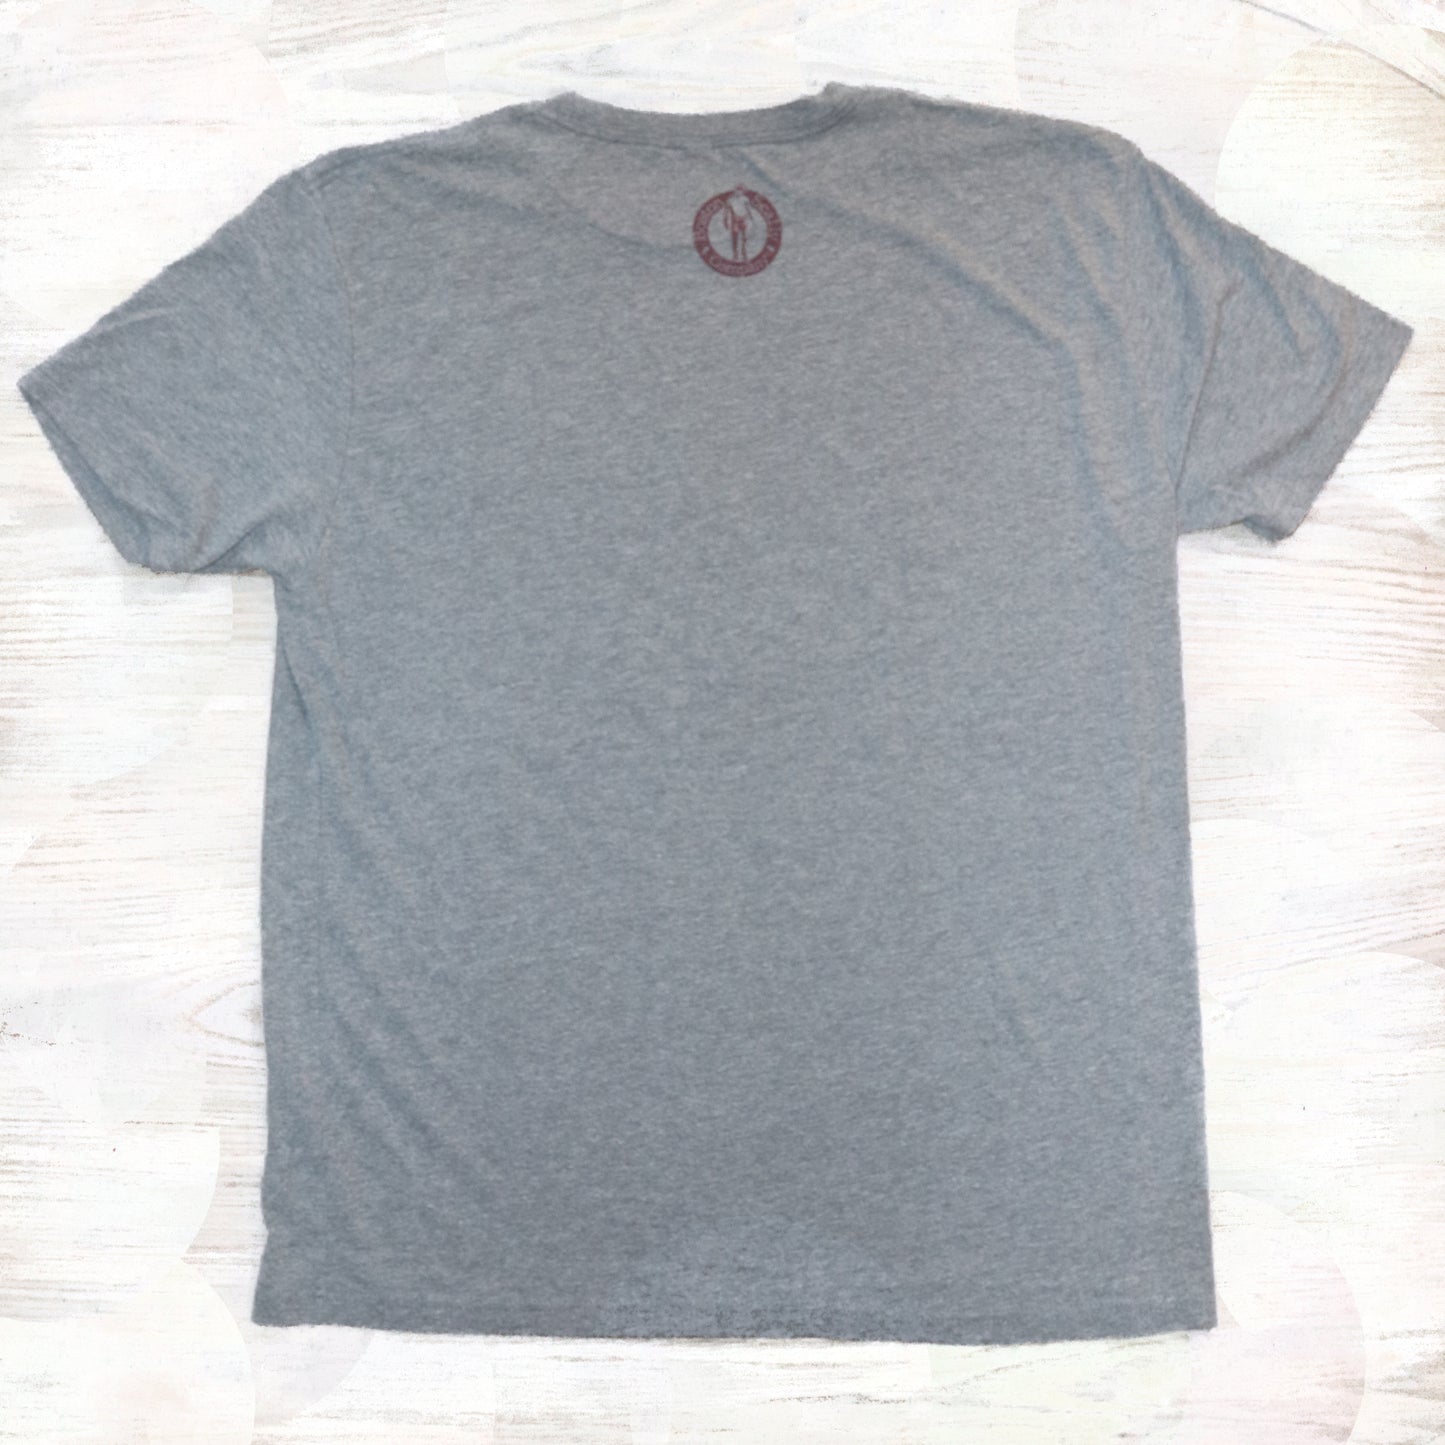 Scally Co. Boston Shirt - XL